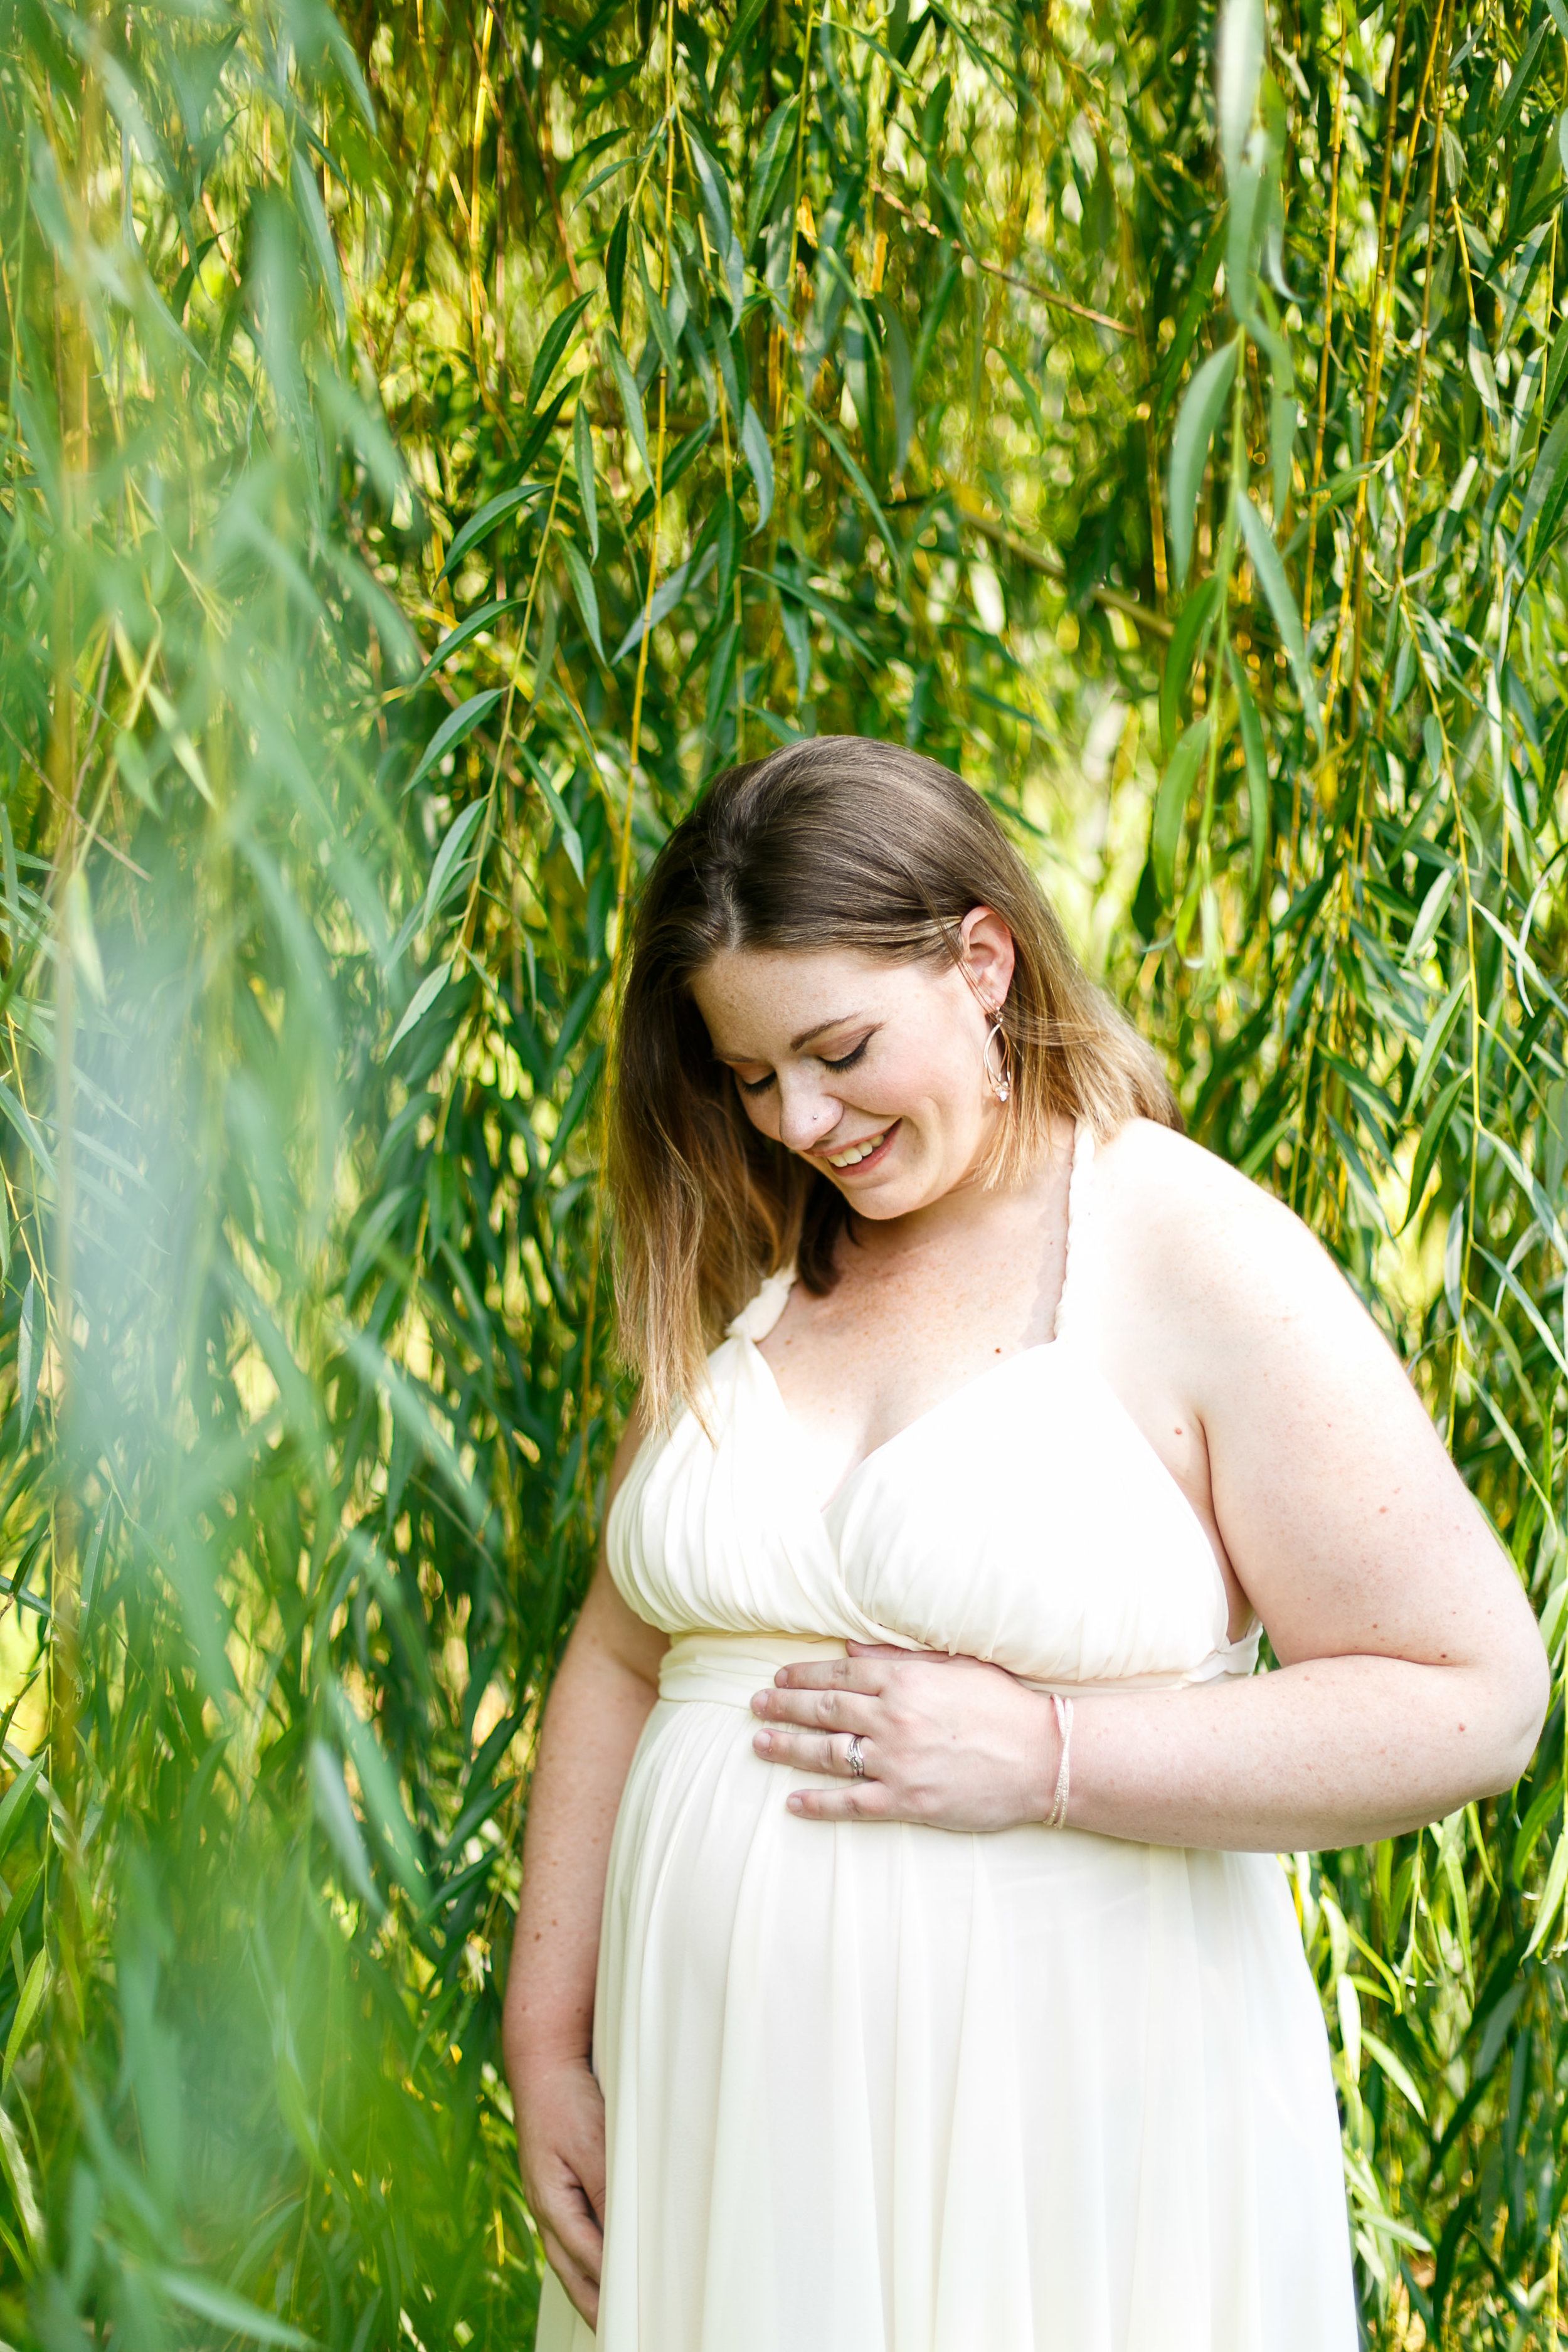 maternity-photoshoot-outdoor-vines-inspiration